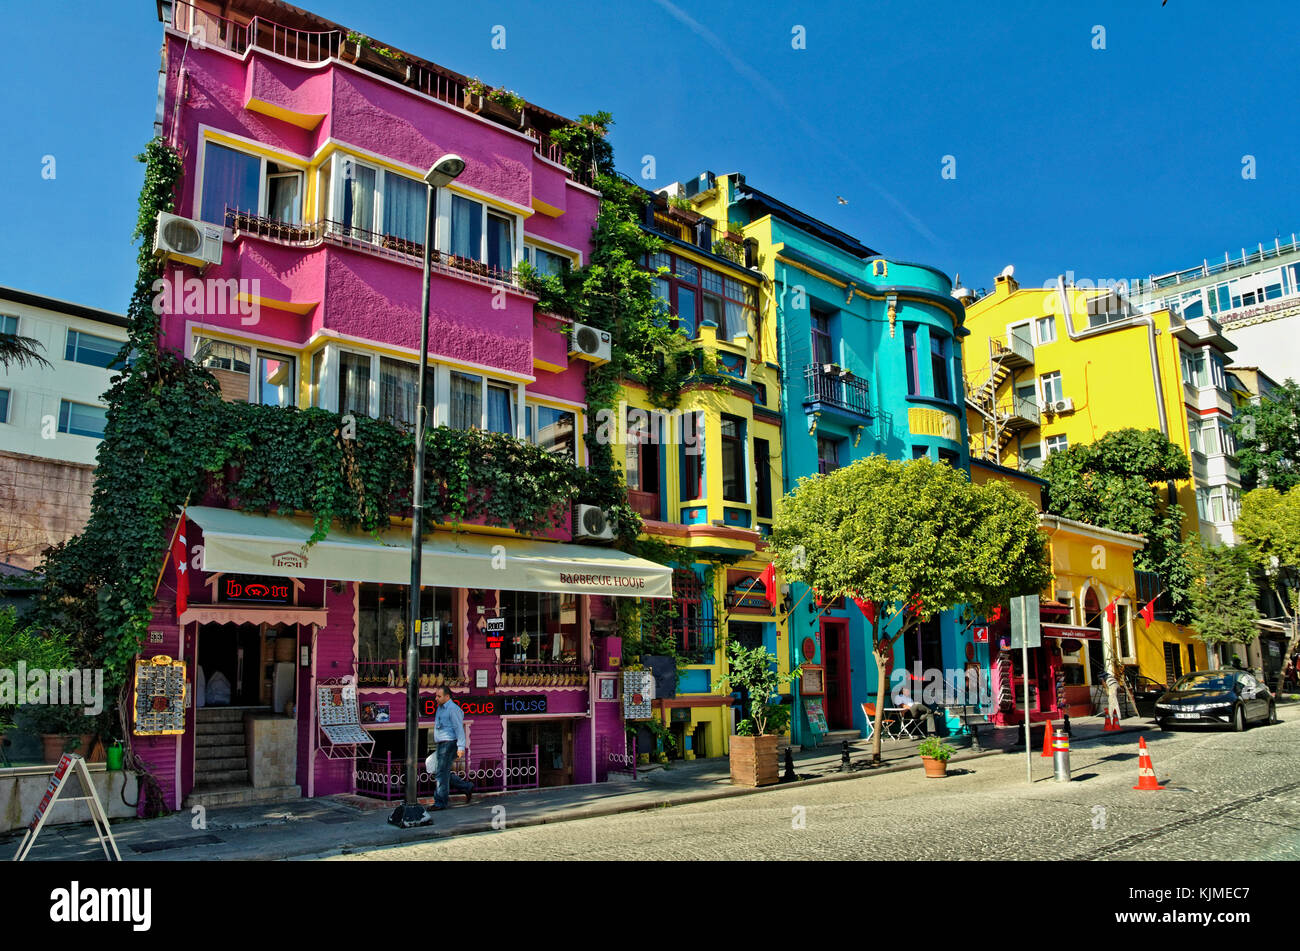 Alberghi colorati su Yerebatan Street, adiacente al Yerebatan cisterna sotterranea, Sultanahmet, Fatih, Istanbul, Turchia. Foto Stock